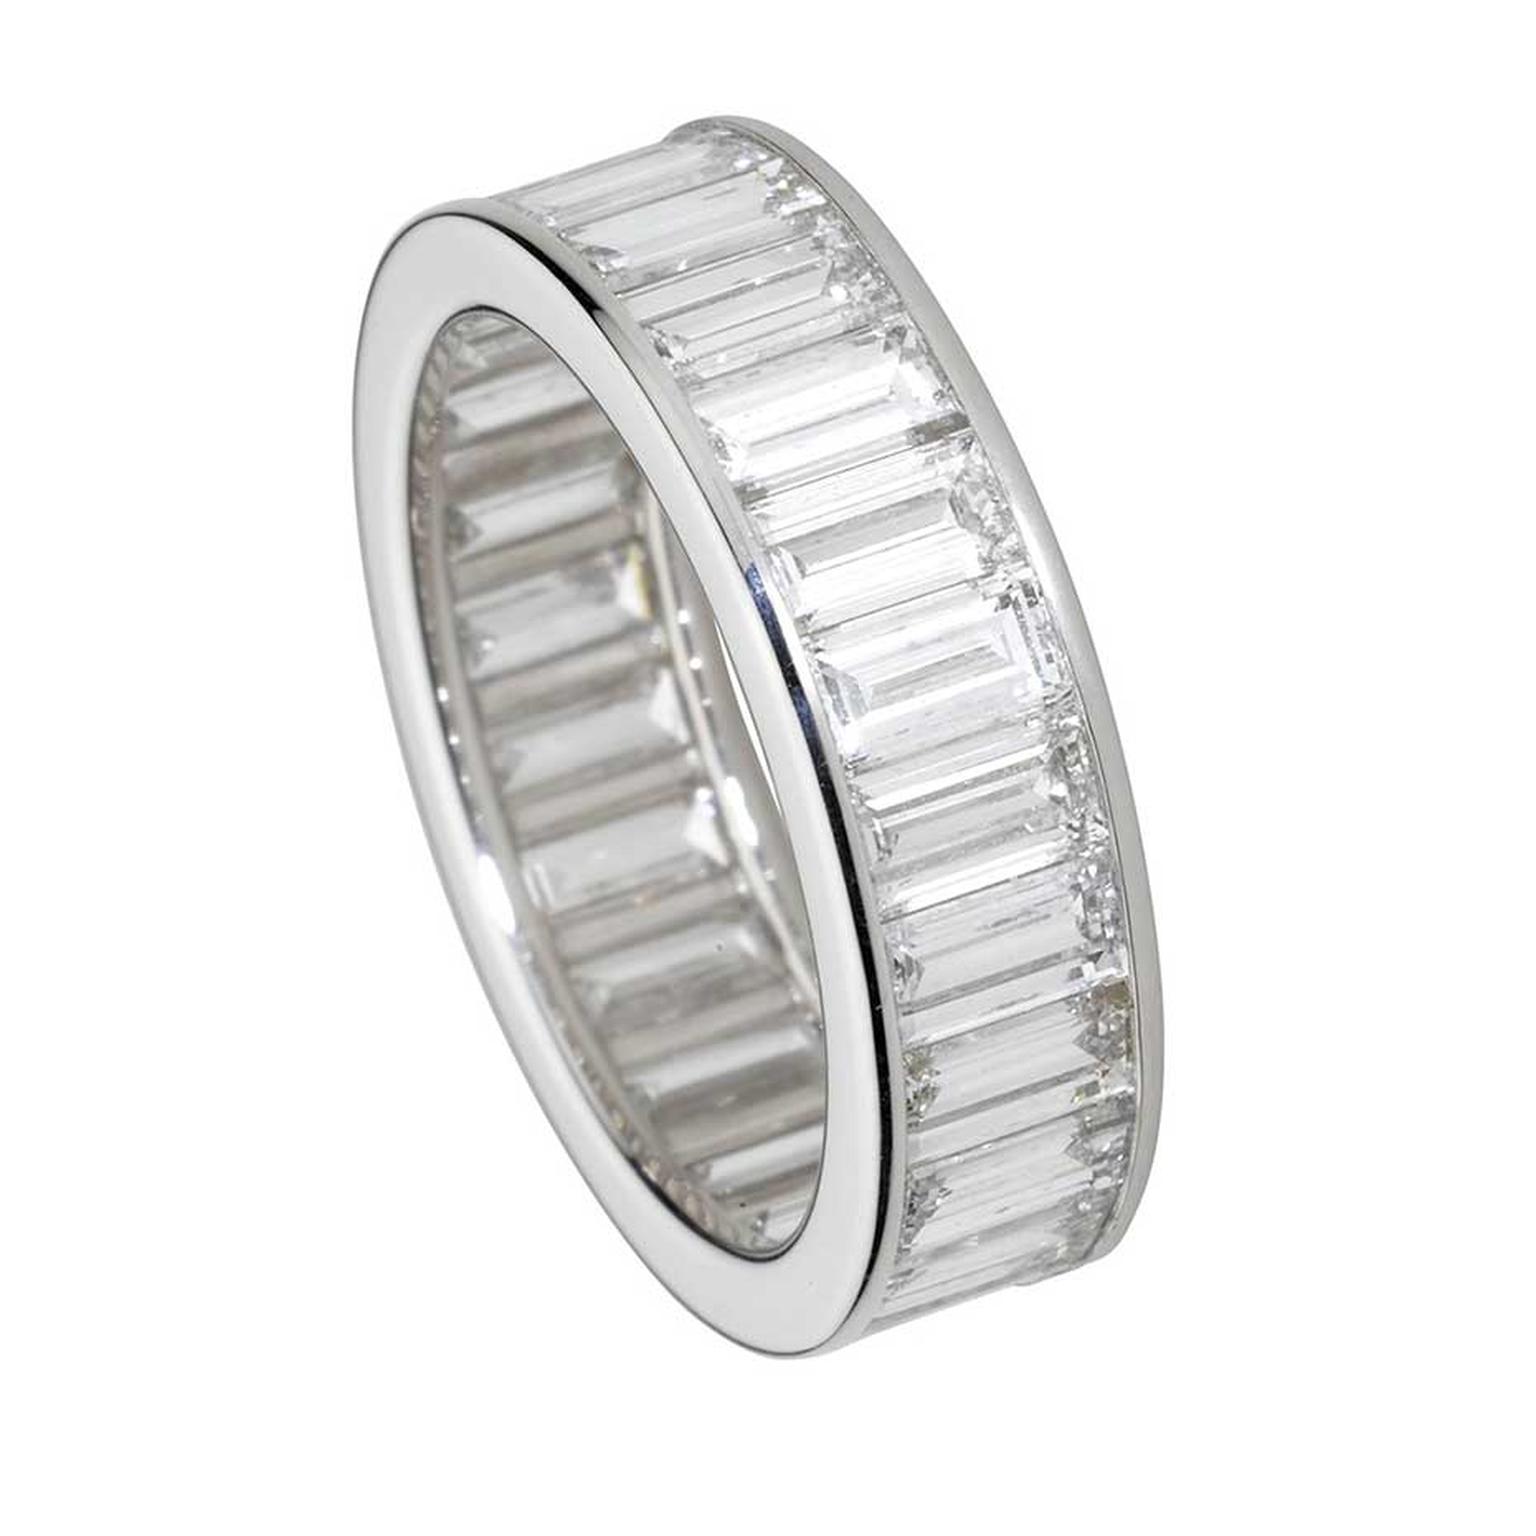 Cartier eternity ring in platinum, set 